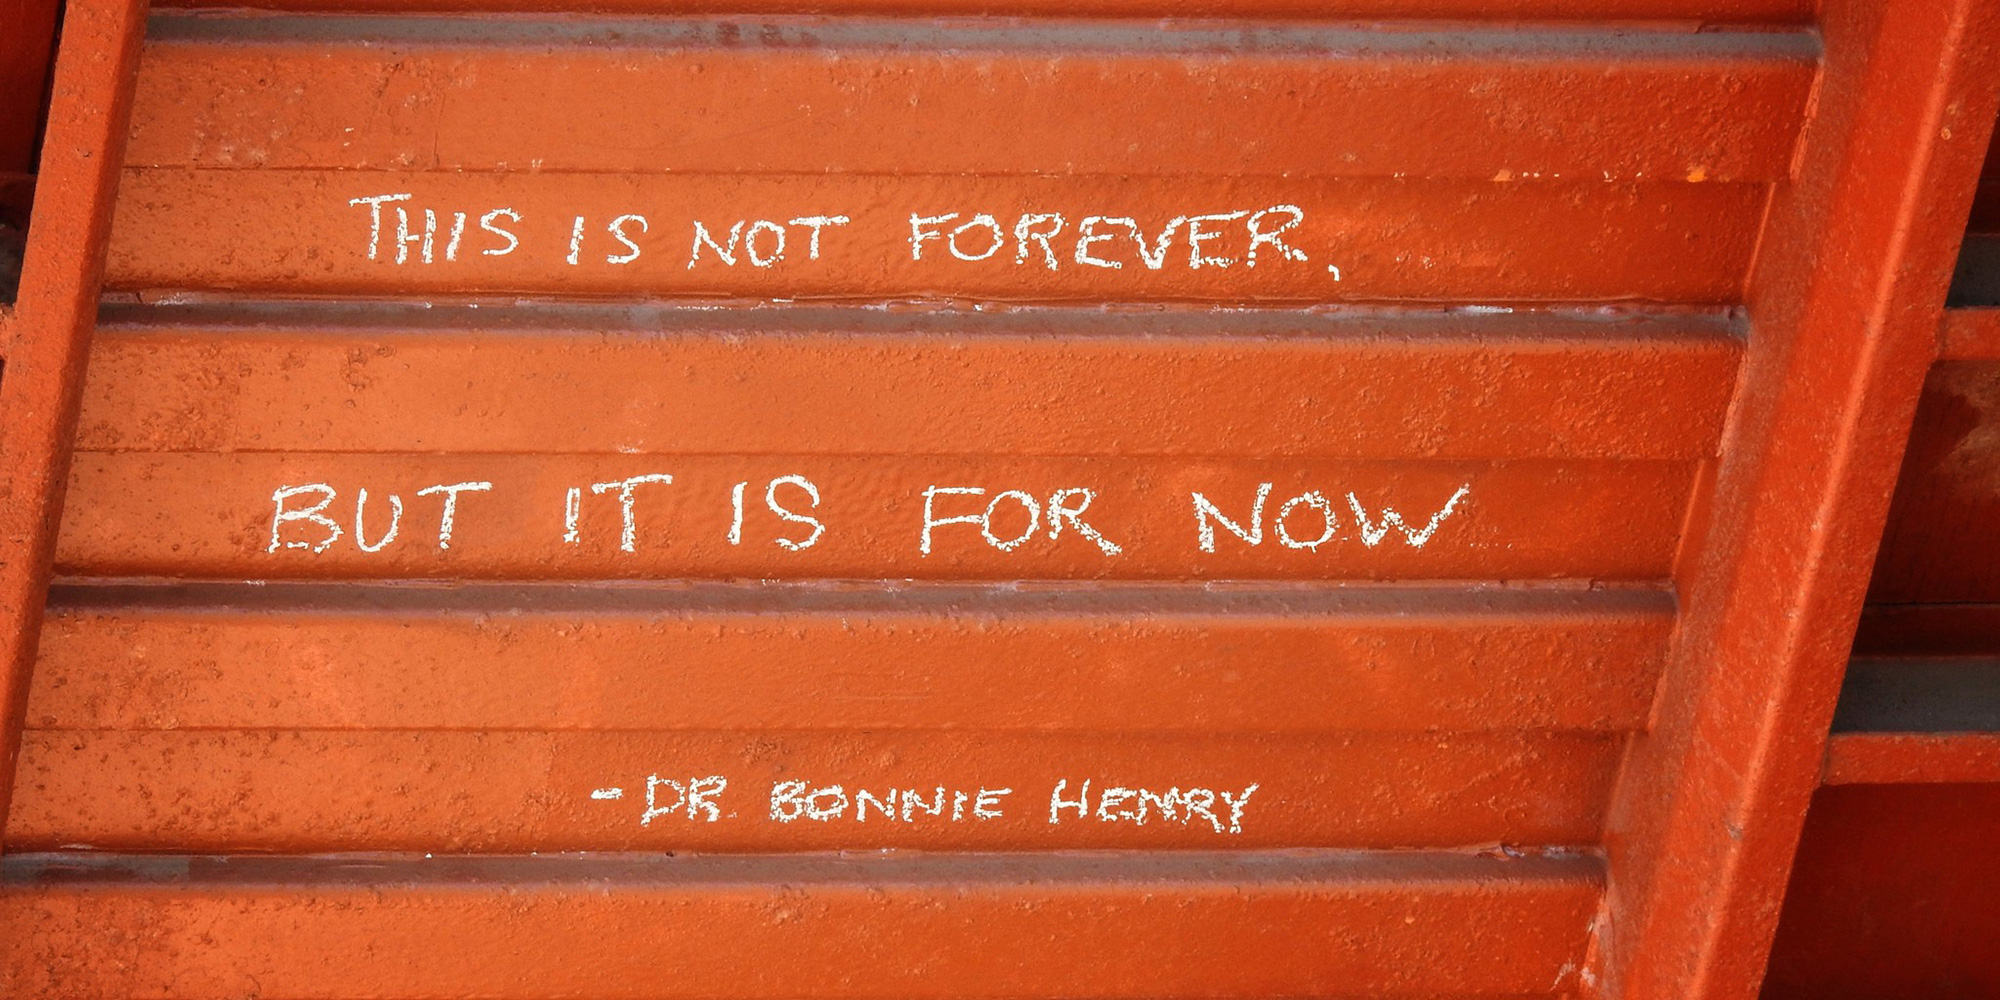 Dr. Bonnie Henry quote